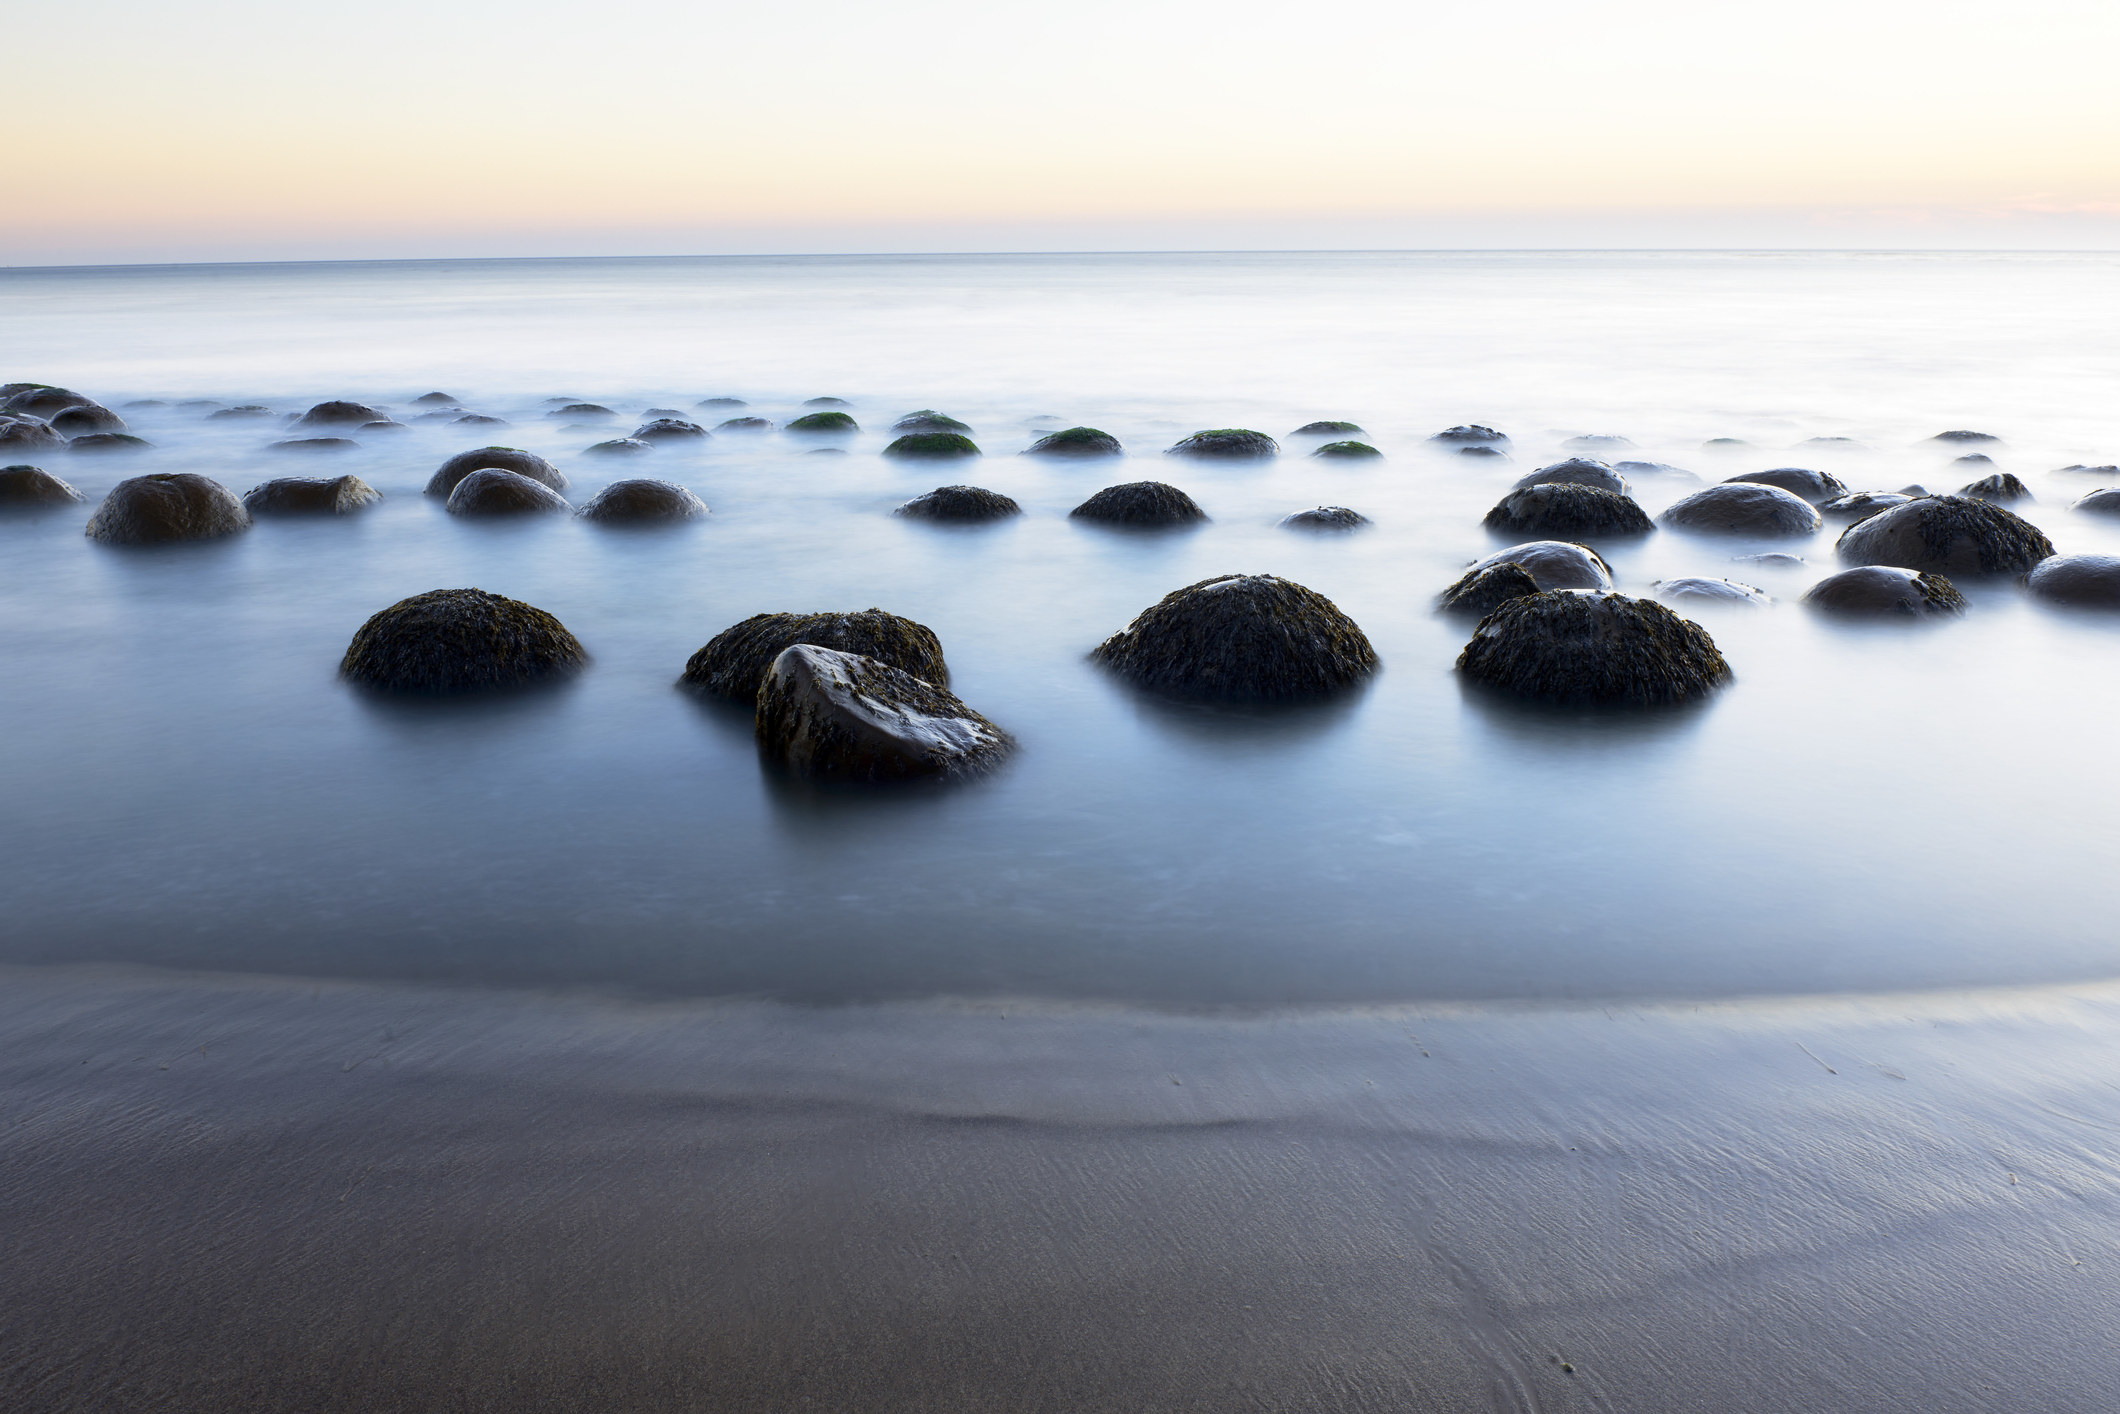 A serene beach setting with smooth rocks like bowling balls. 